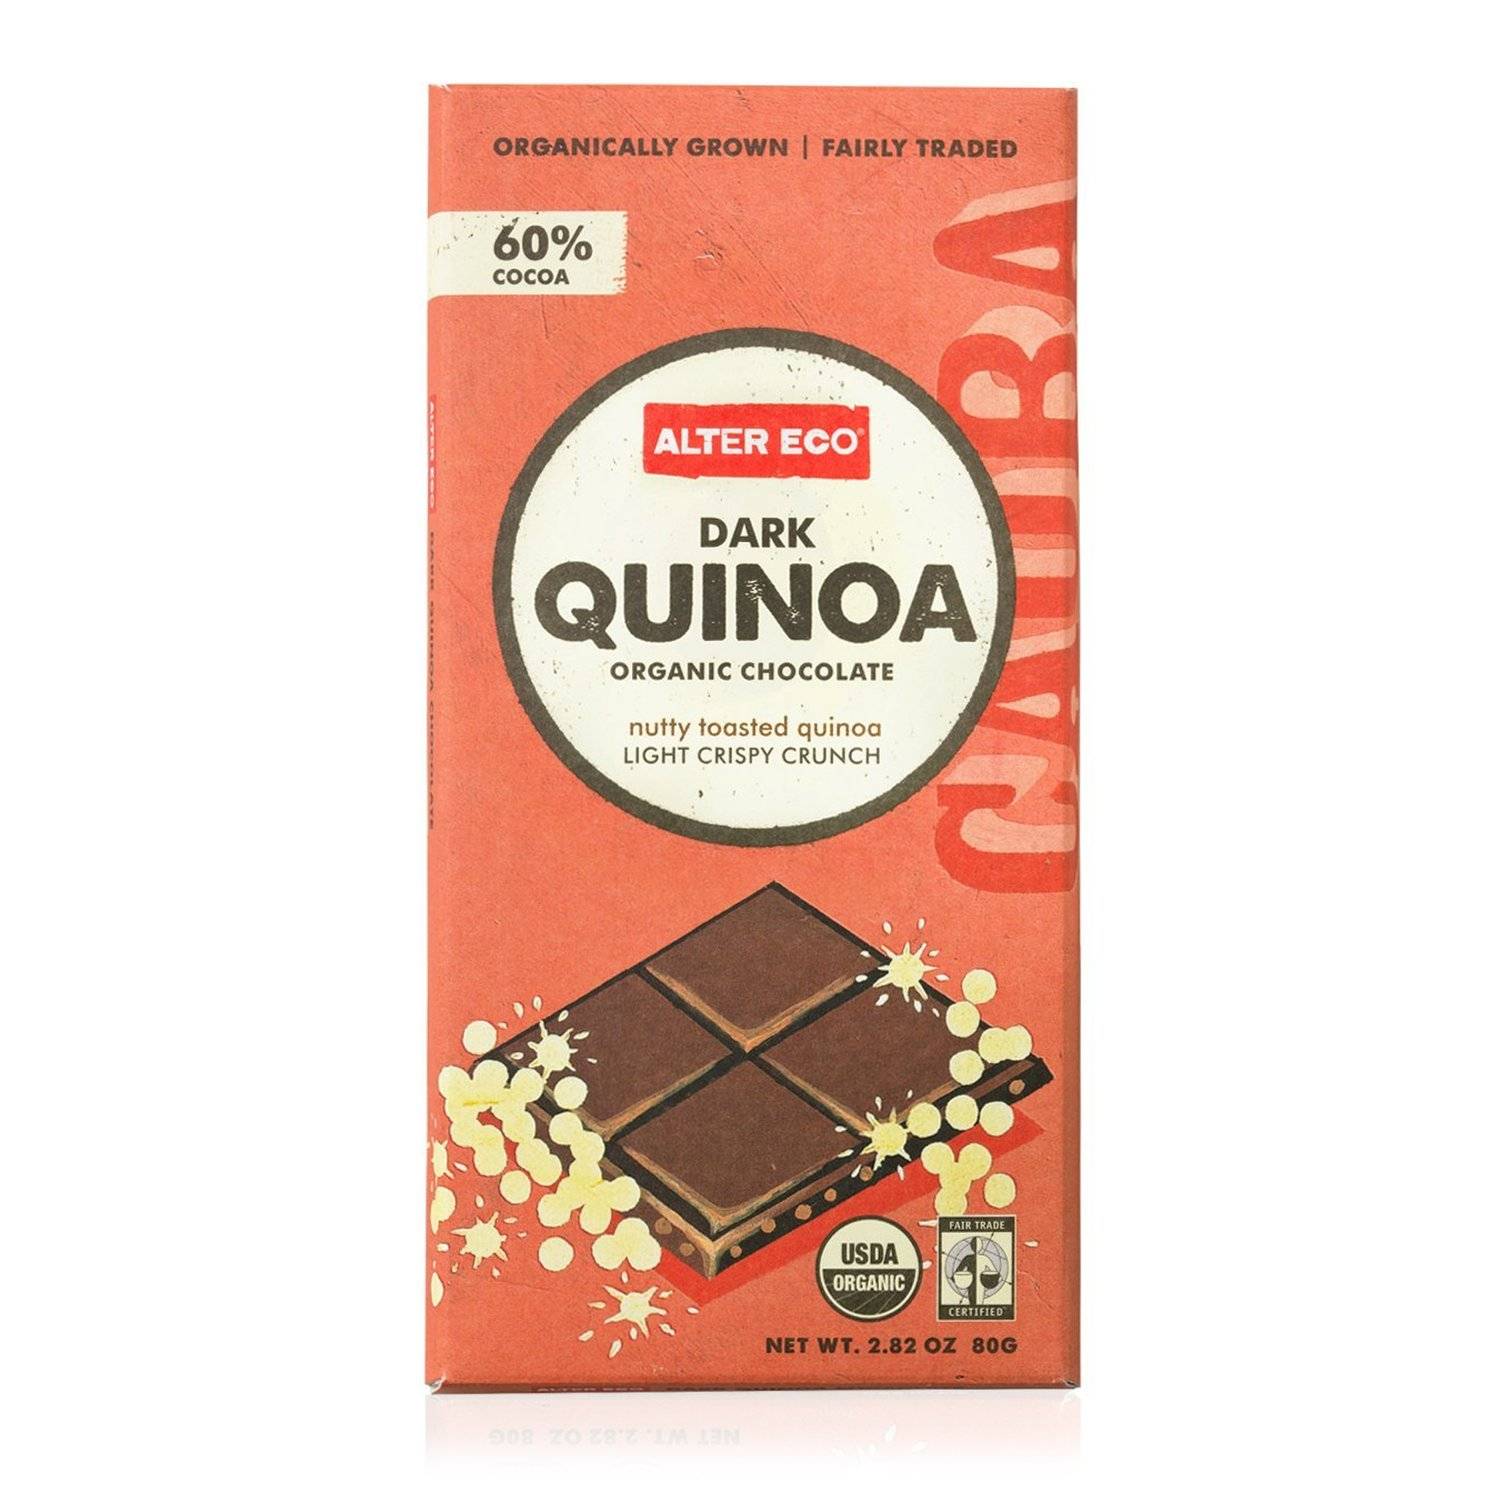 Dark Quinoa Organic Chocolate